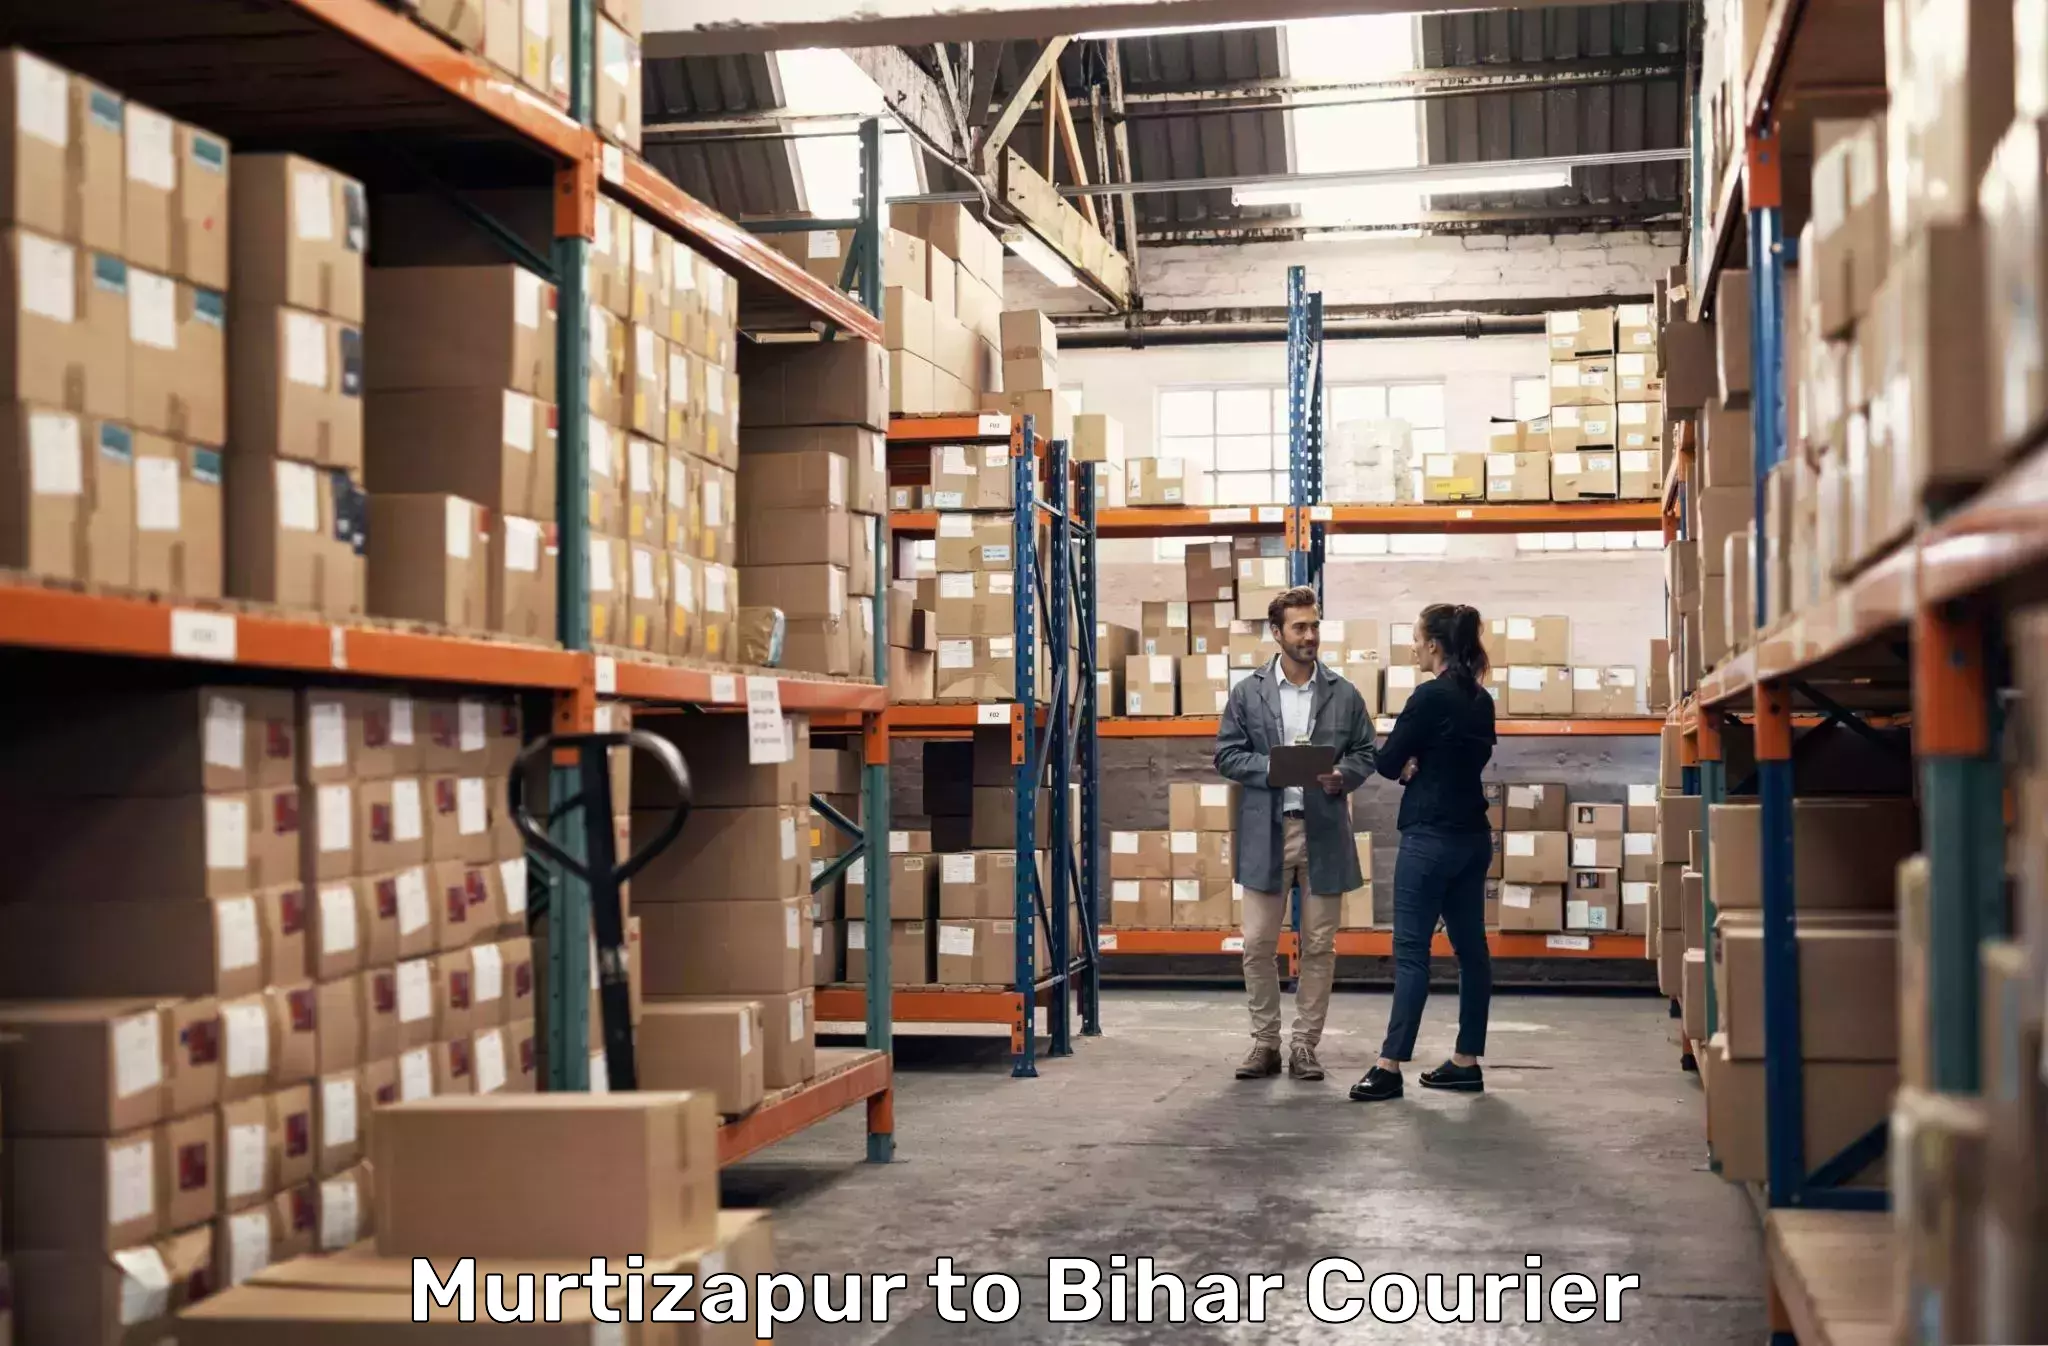 Express delivery network Murtizapur to Bihar